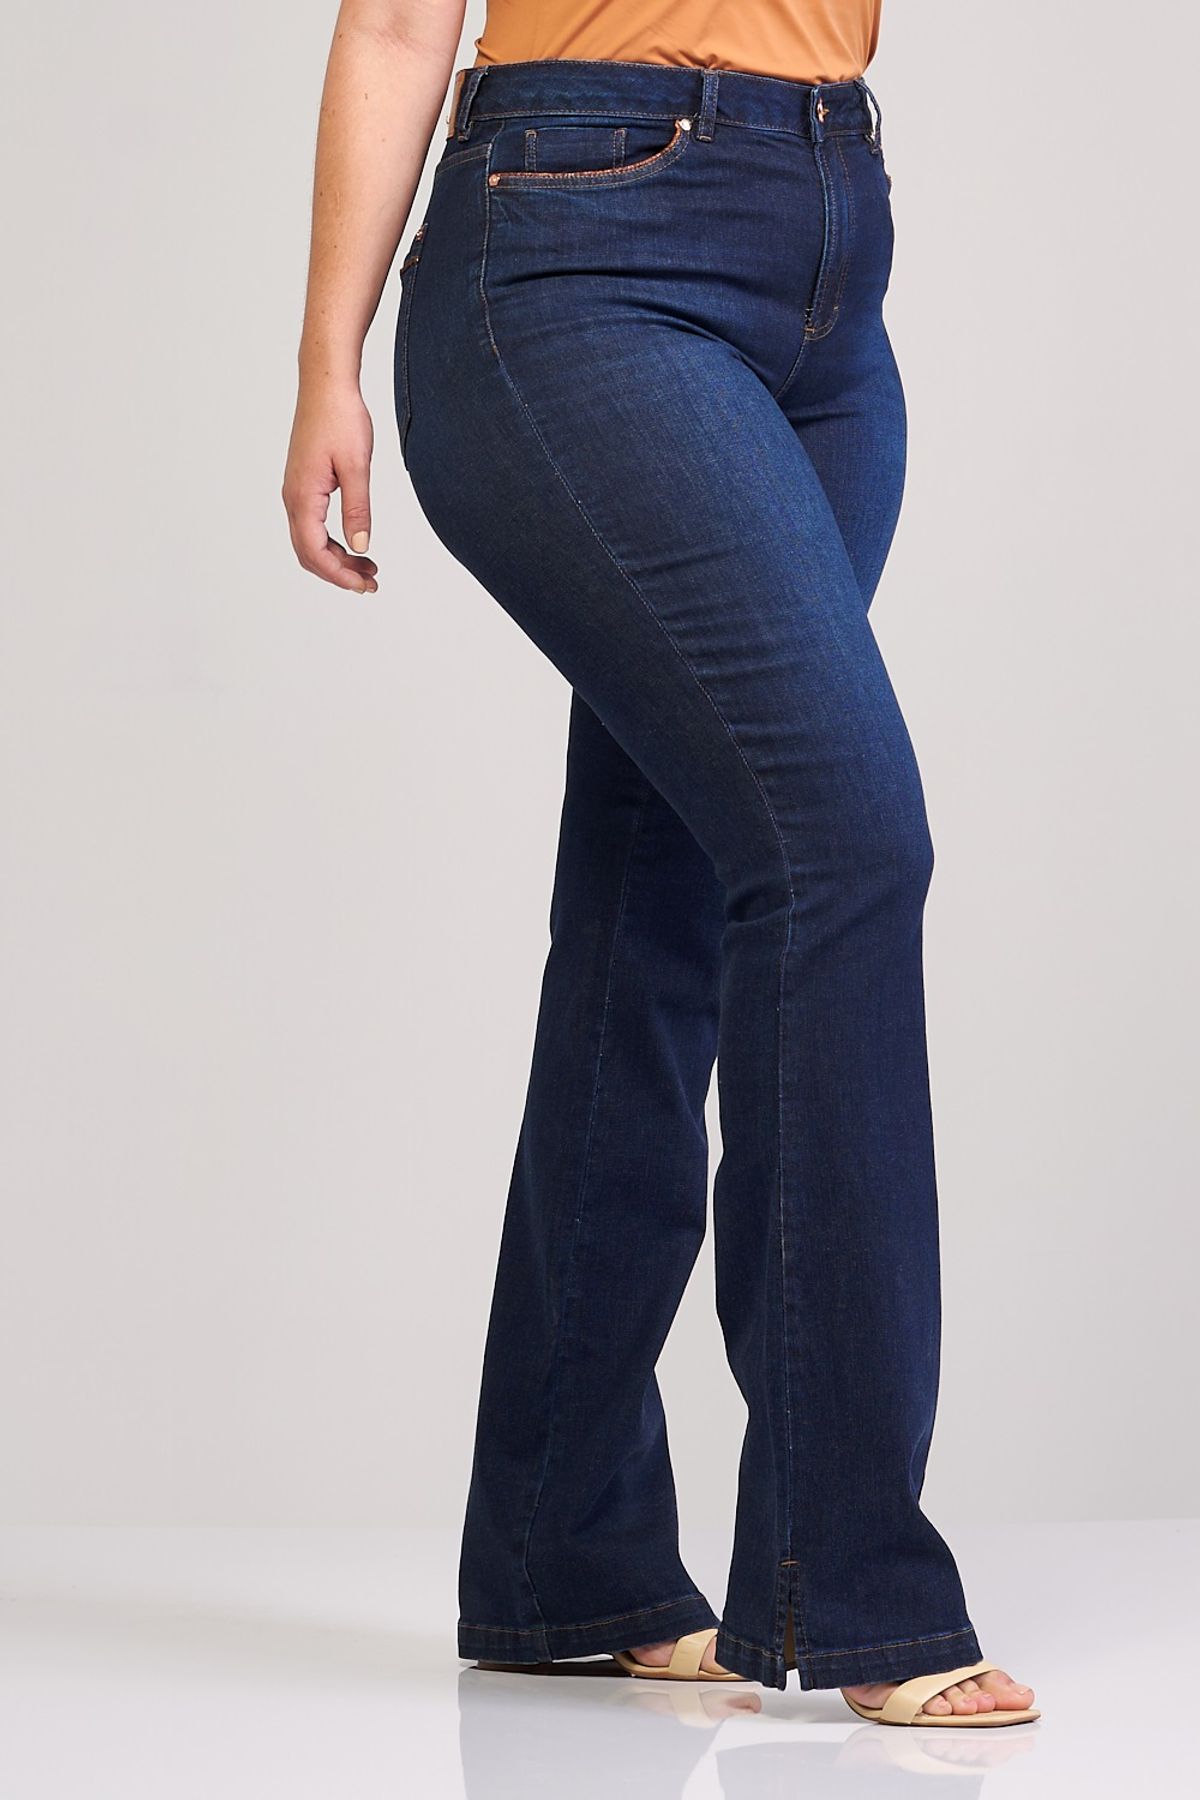 Bermuda Patogê feminina curvy jeans cintura média (G3) BE37131 - patoge